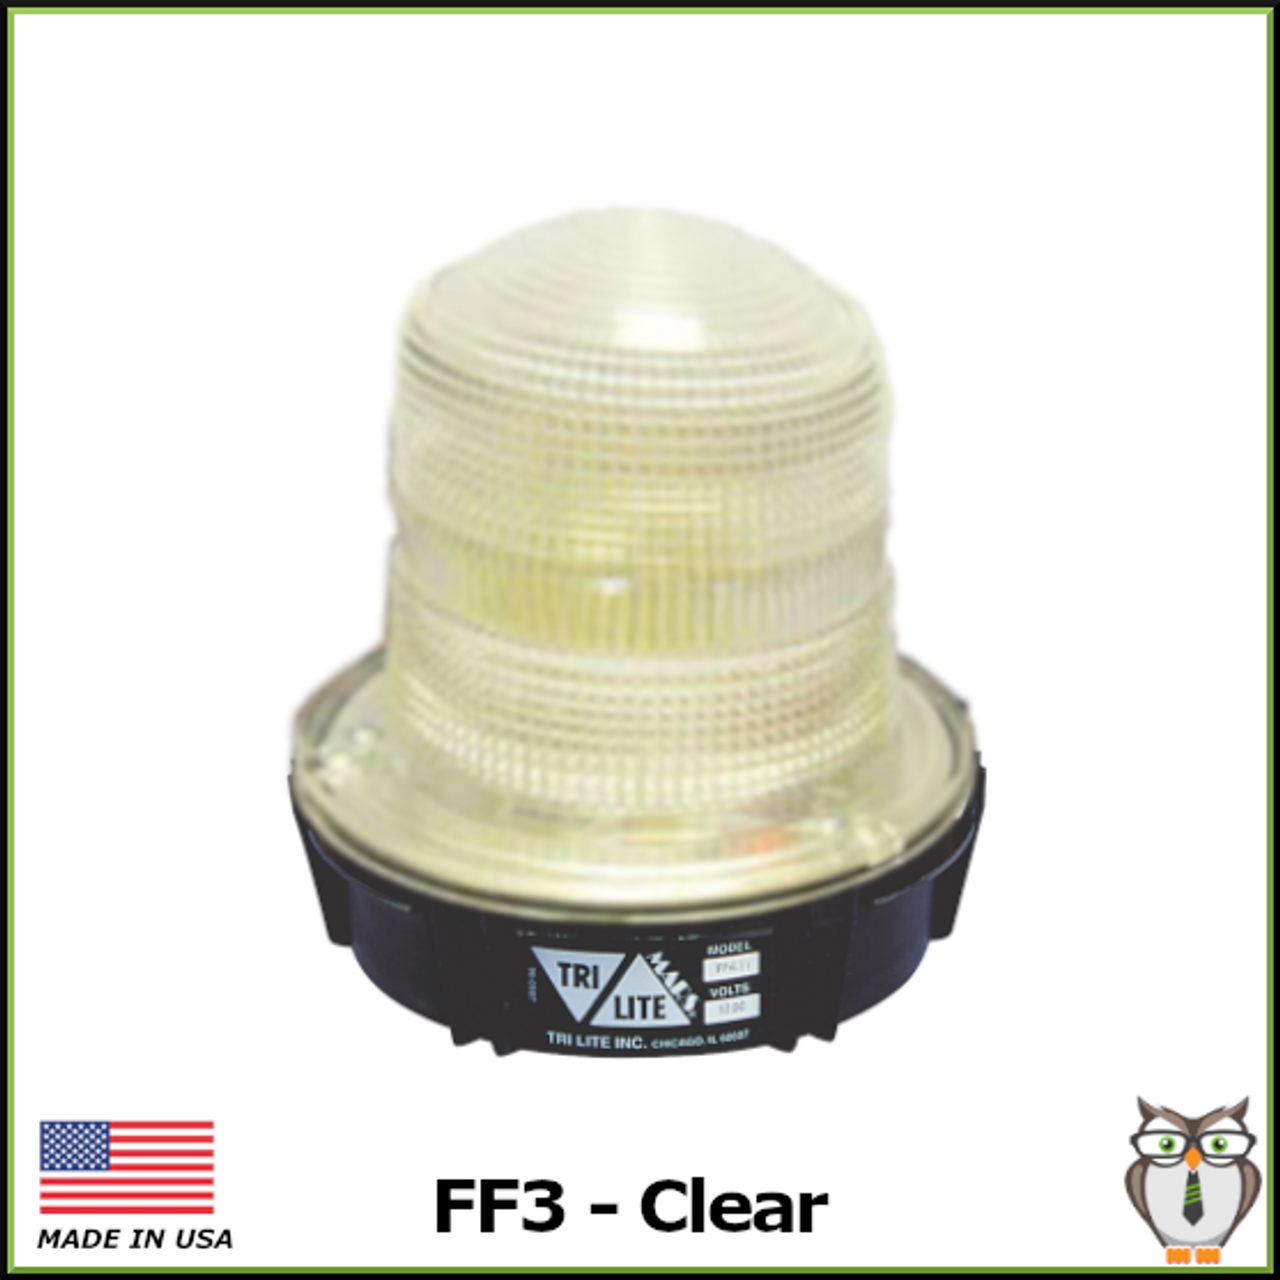 FF3 DC Flashing Light - Clear